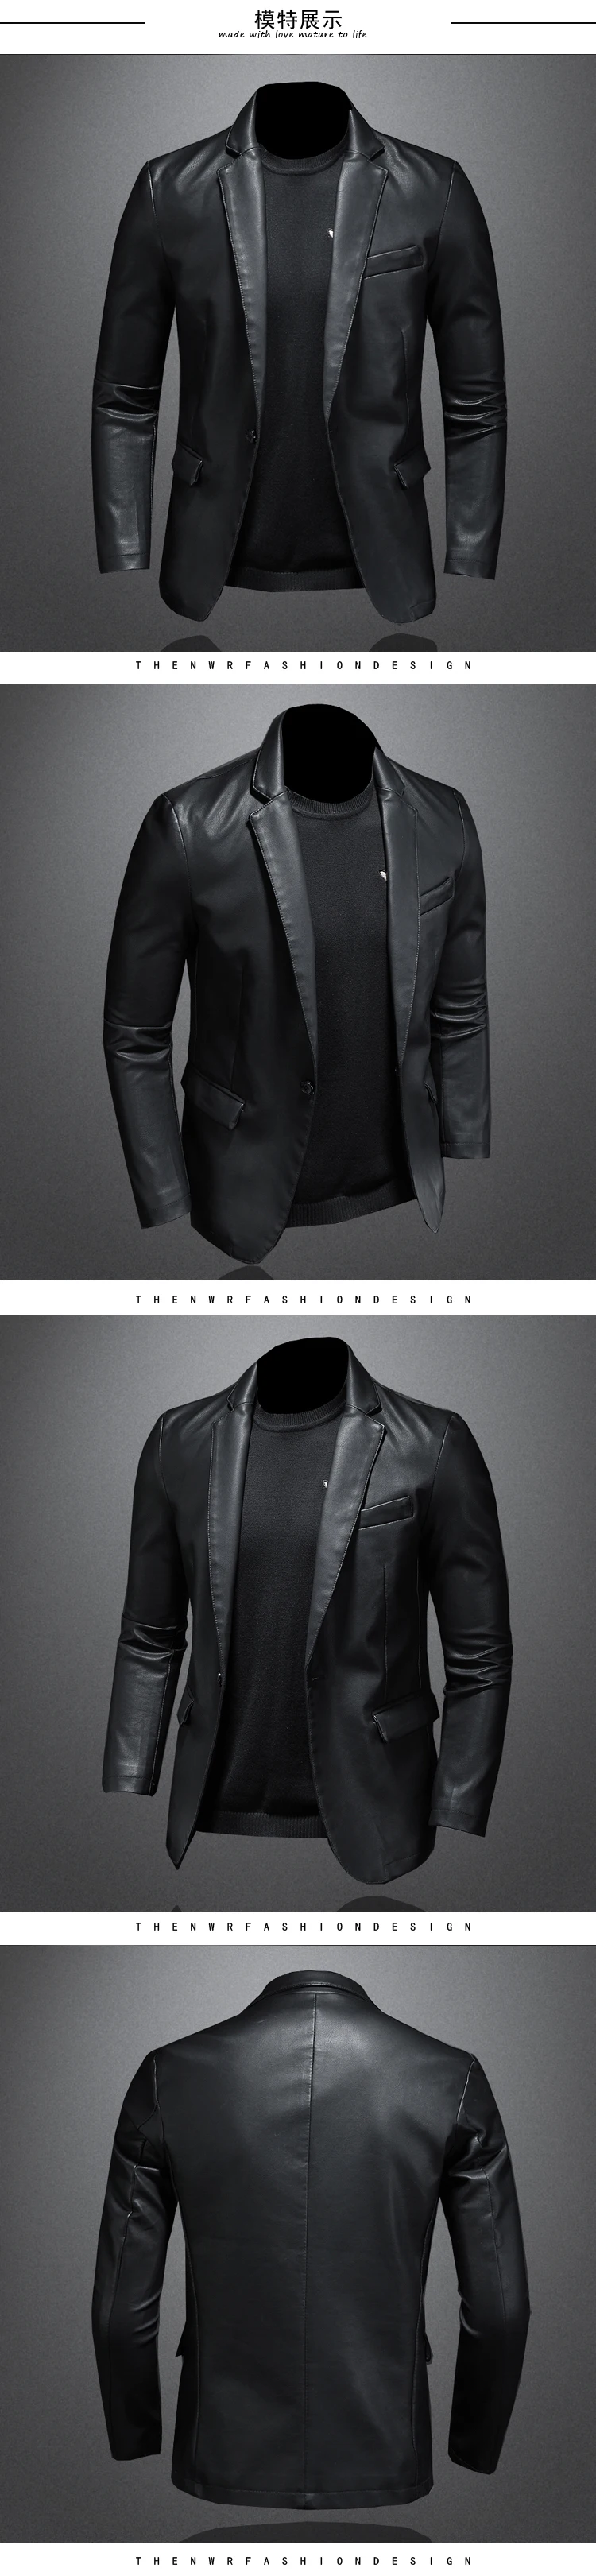 2021 New Suit Oversized Leather Jacket Business Fashion Men's Vegan Jacket Men's Slim Fit PU Leather Jacket Suit For Men S-5XL tall leather jacket